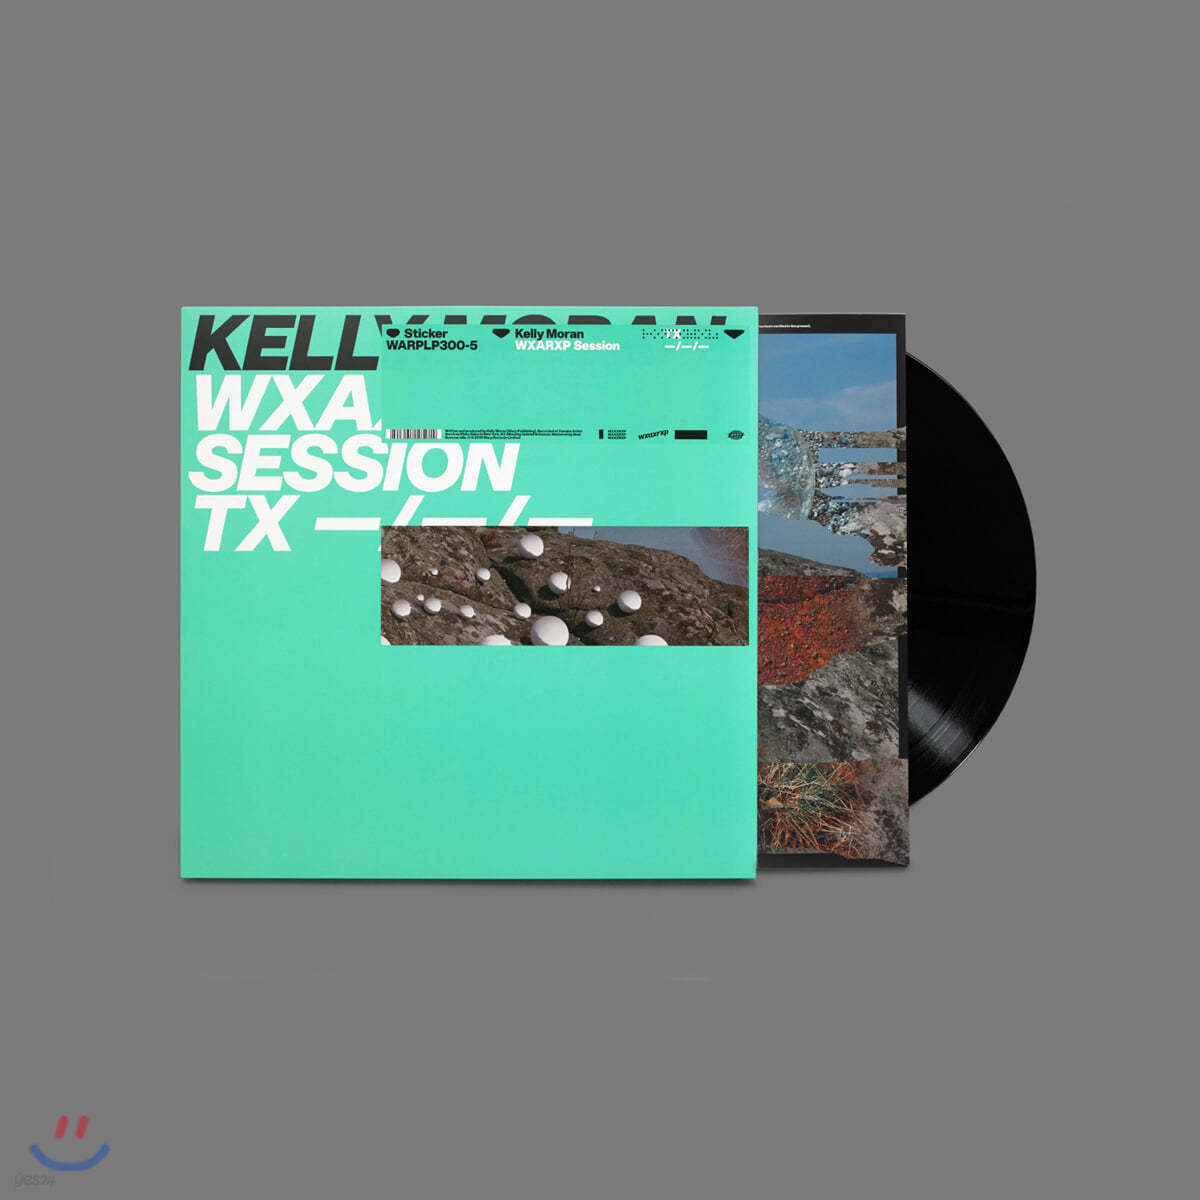 Kelly Moran (켈리 모런) - WXAXRXP Session [LP]